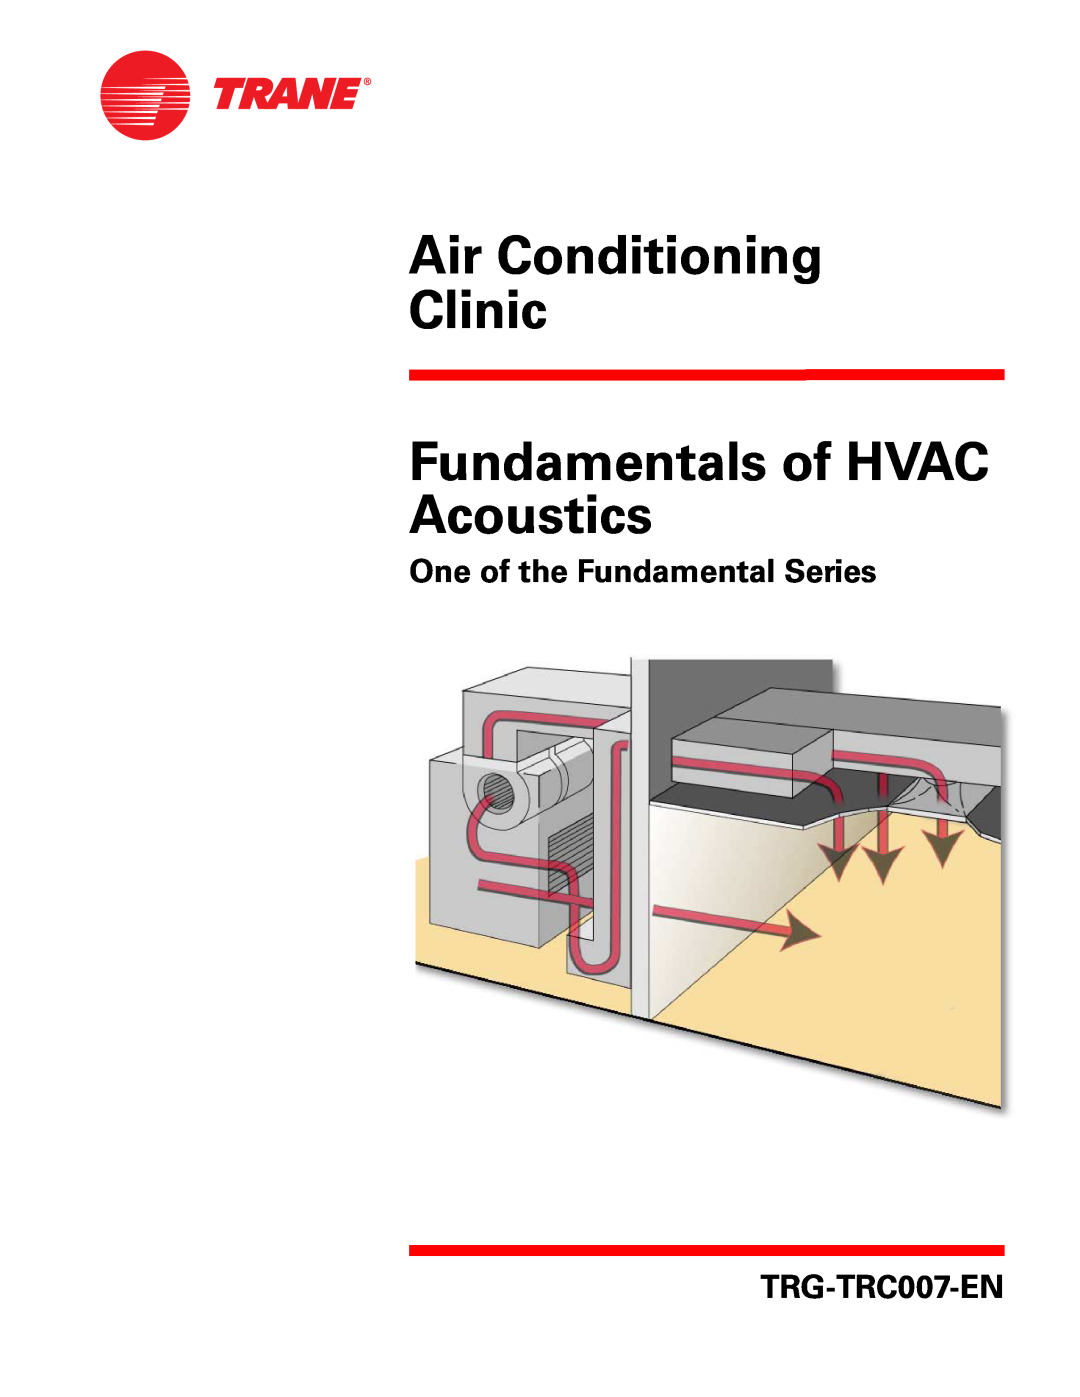 Trane TRG-TRC007-EN manual Air Conditioning Clinic, Fundamentals of HVAC Acoustics, One of the Fundamental Series 